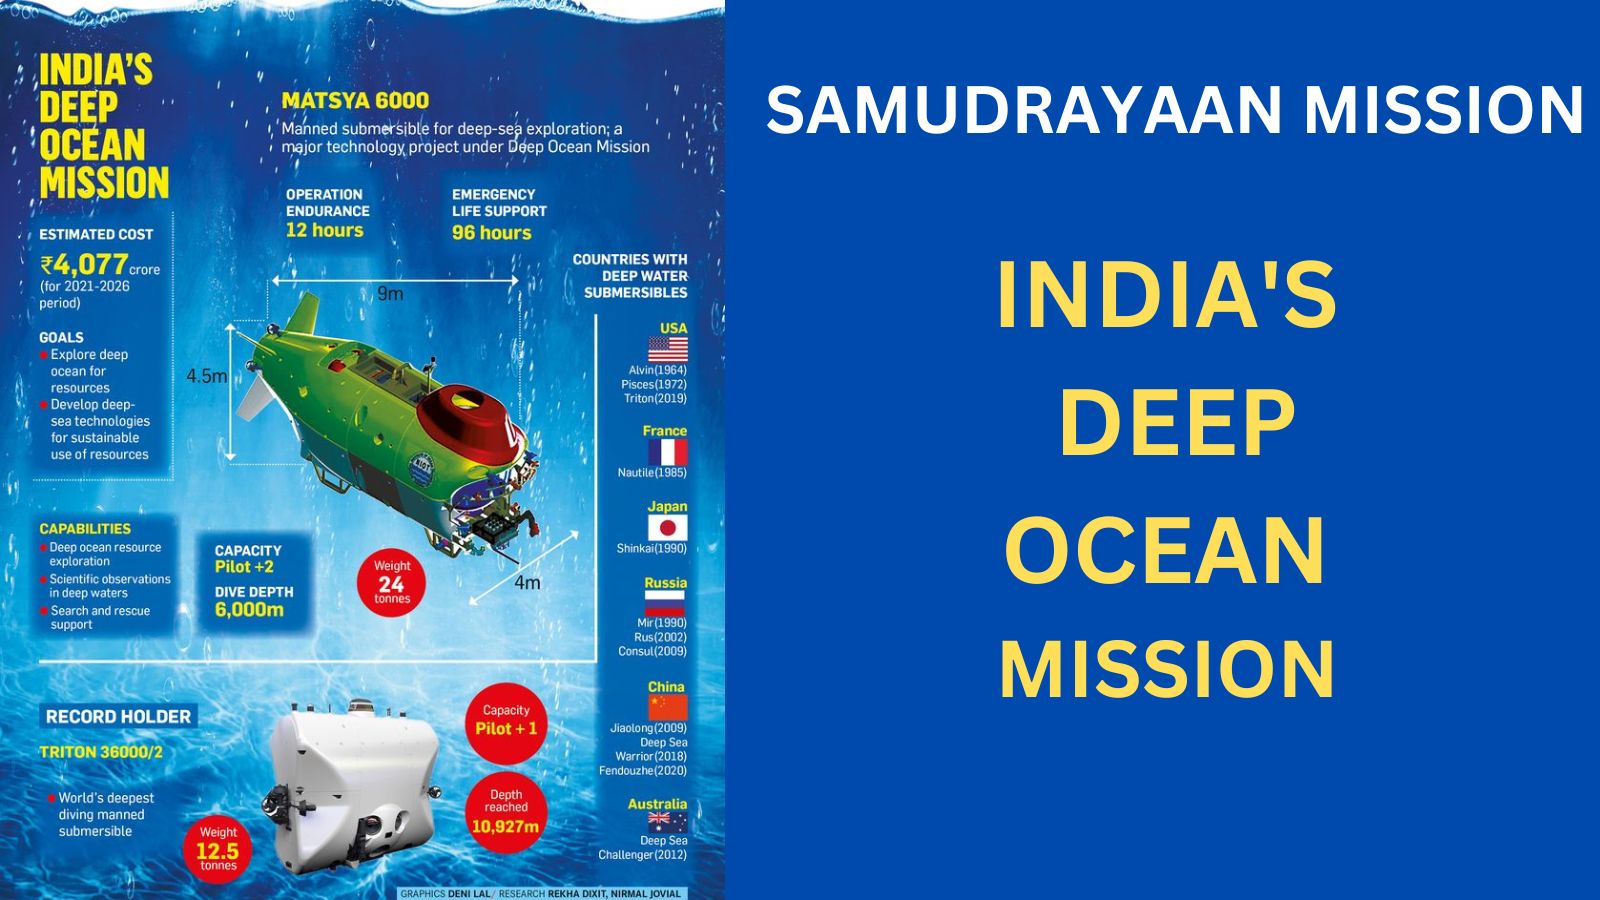 Samudrayaan Mission